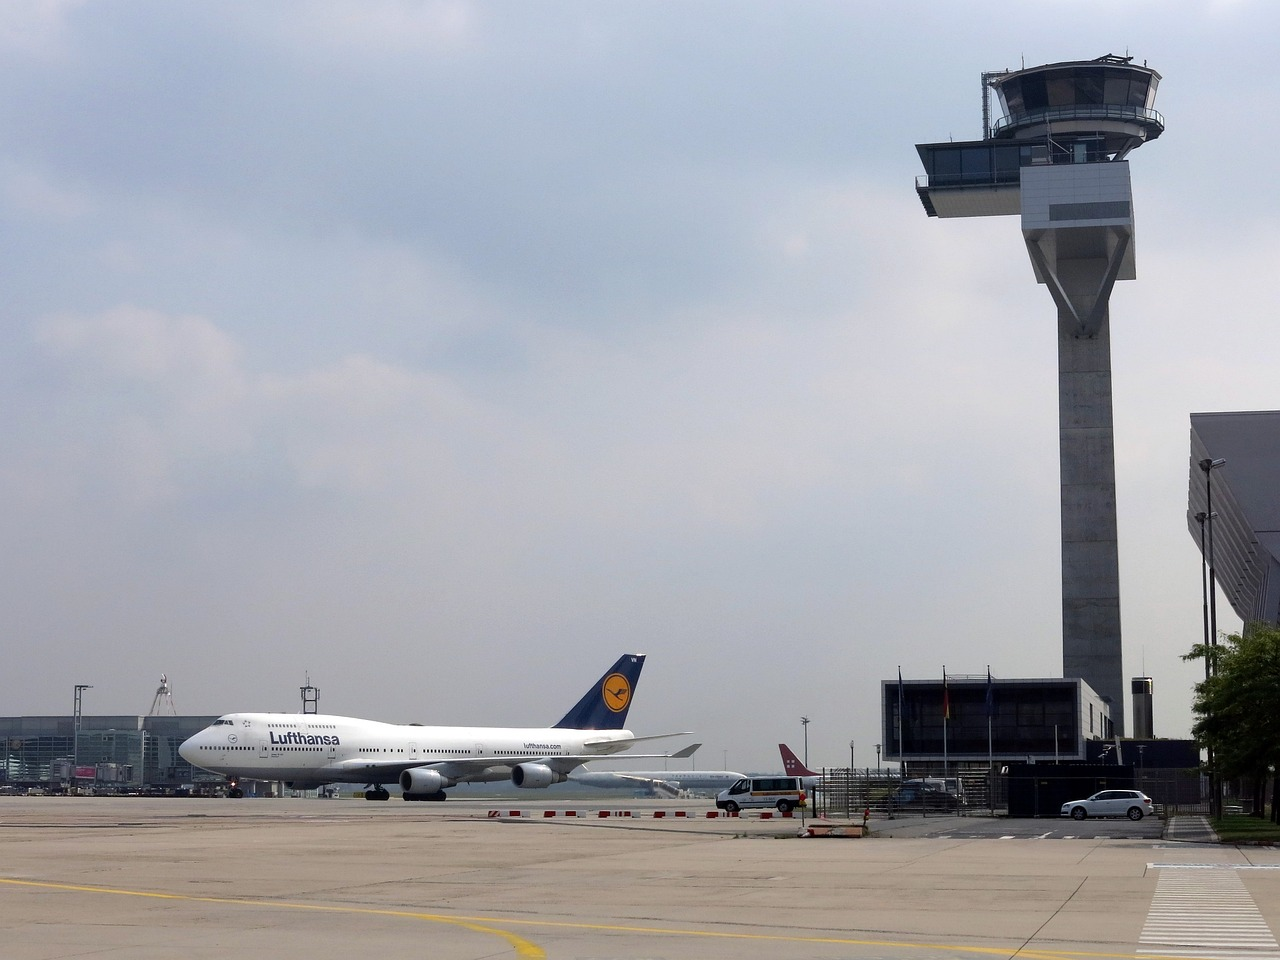 Airport air traffic control tower and a Lufthansa aircraft.